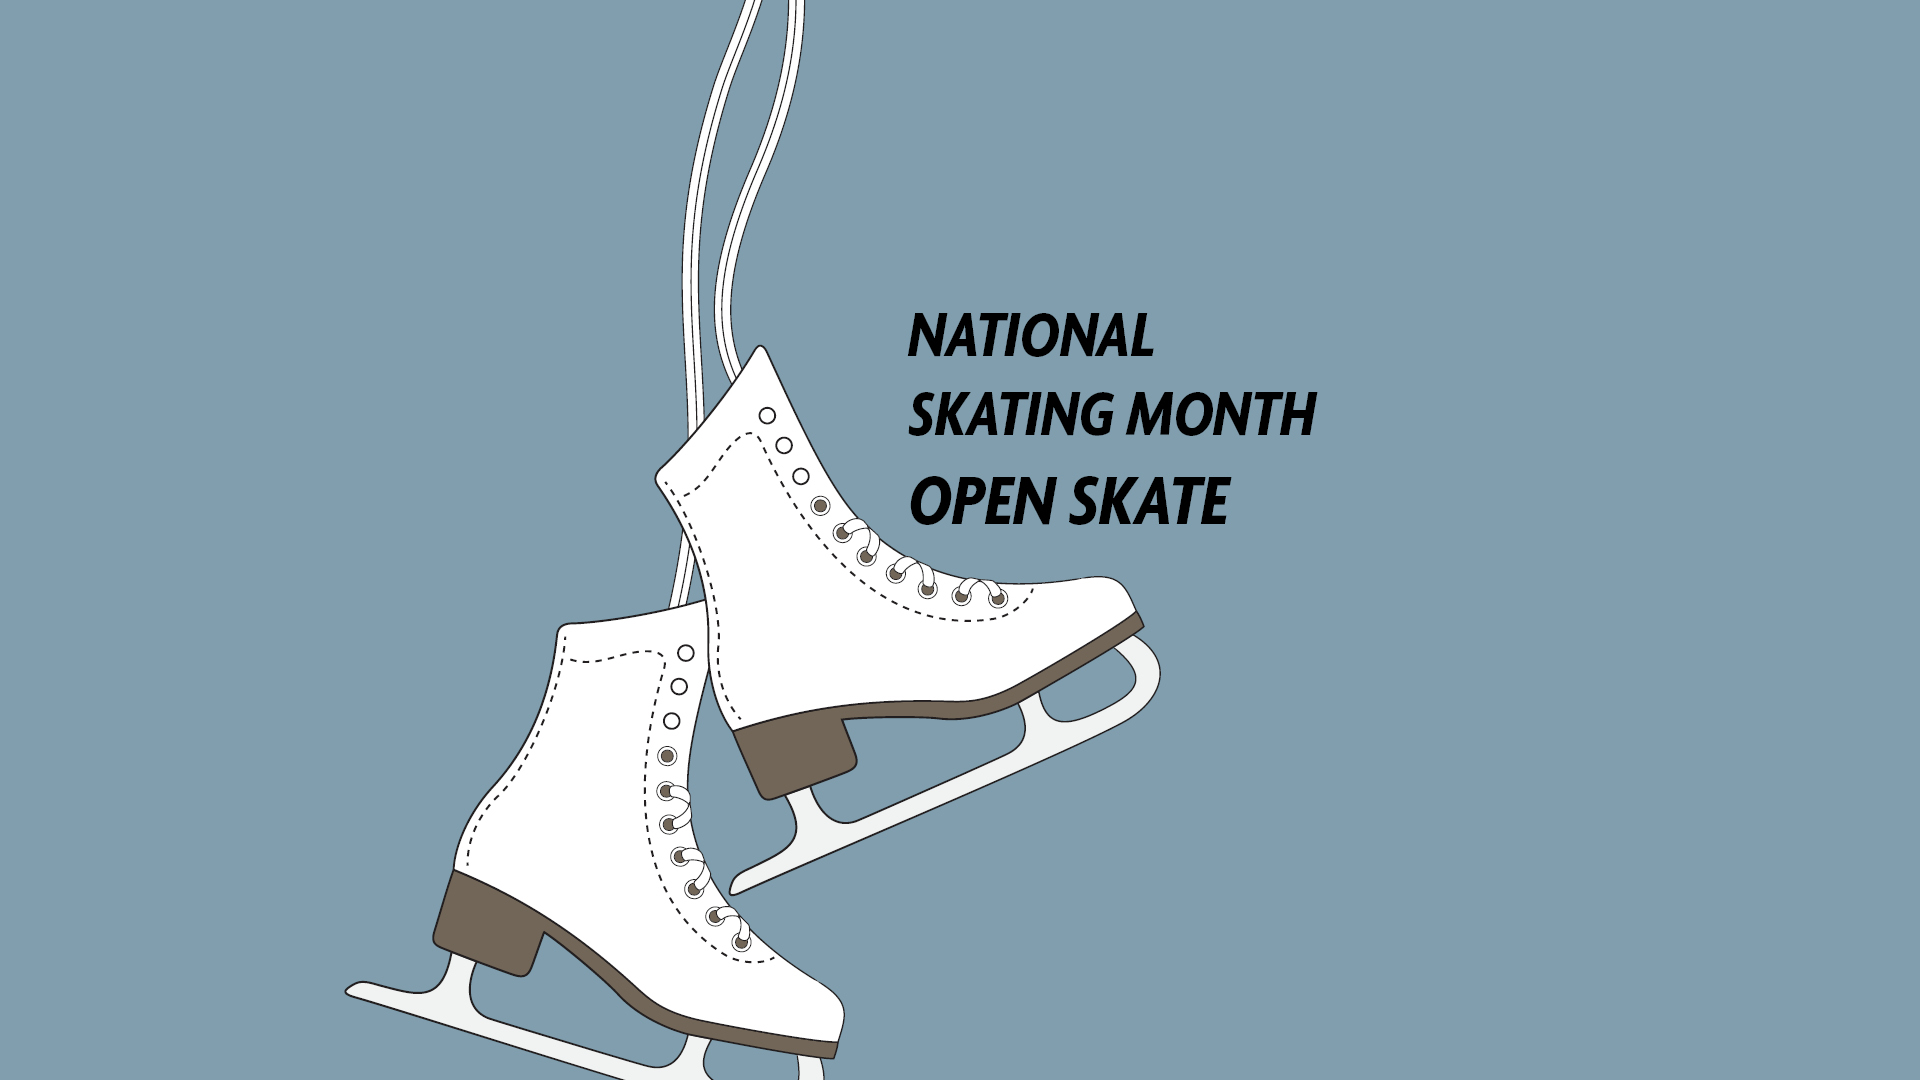 National Skating Month Open Skate